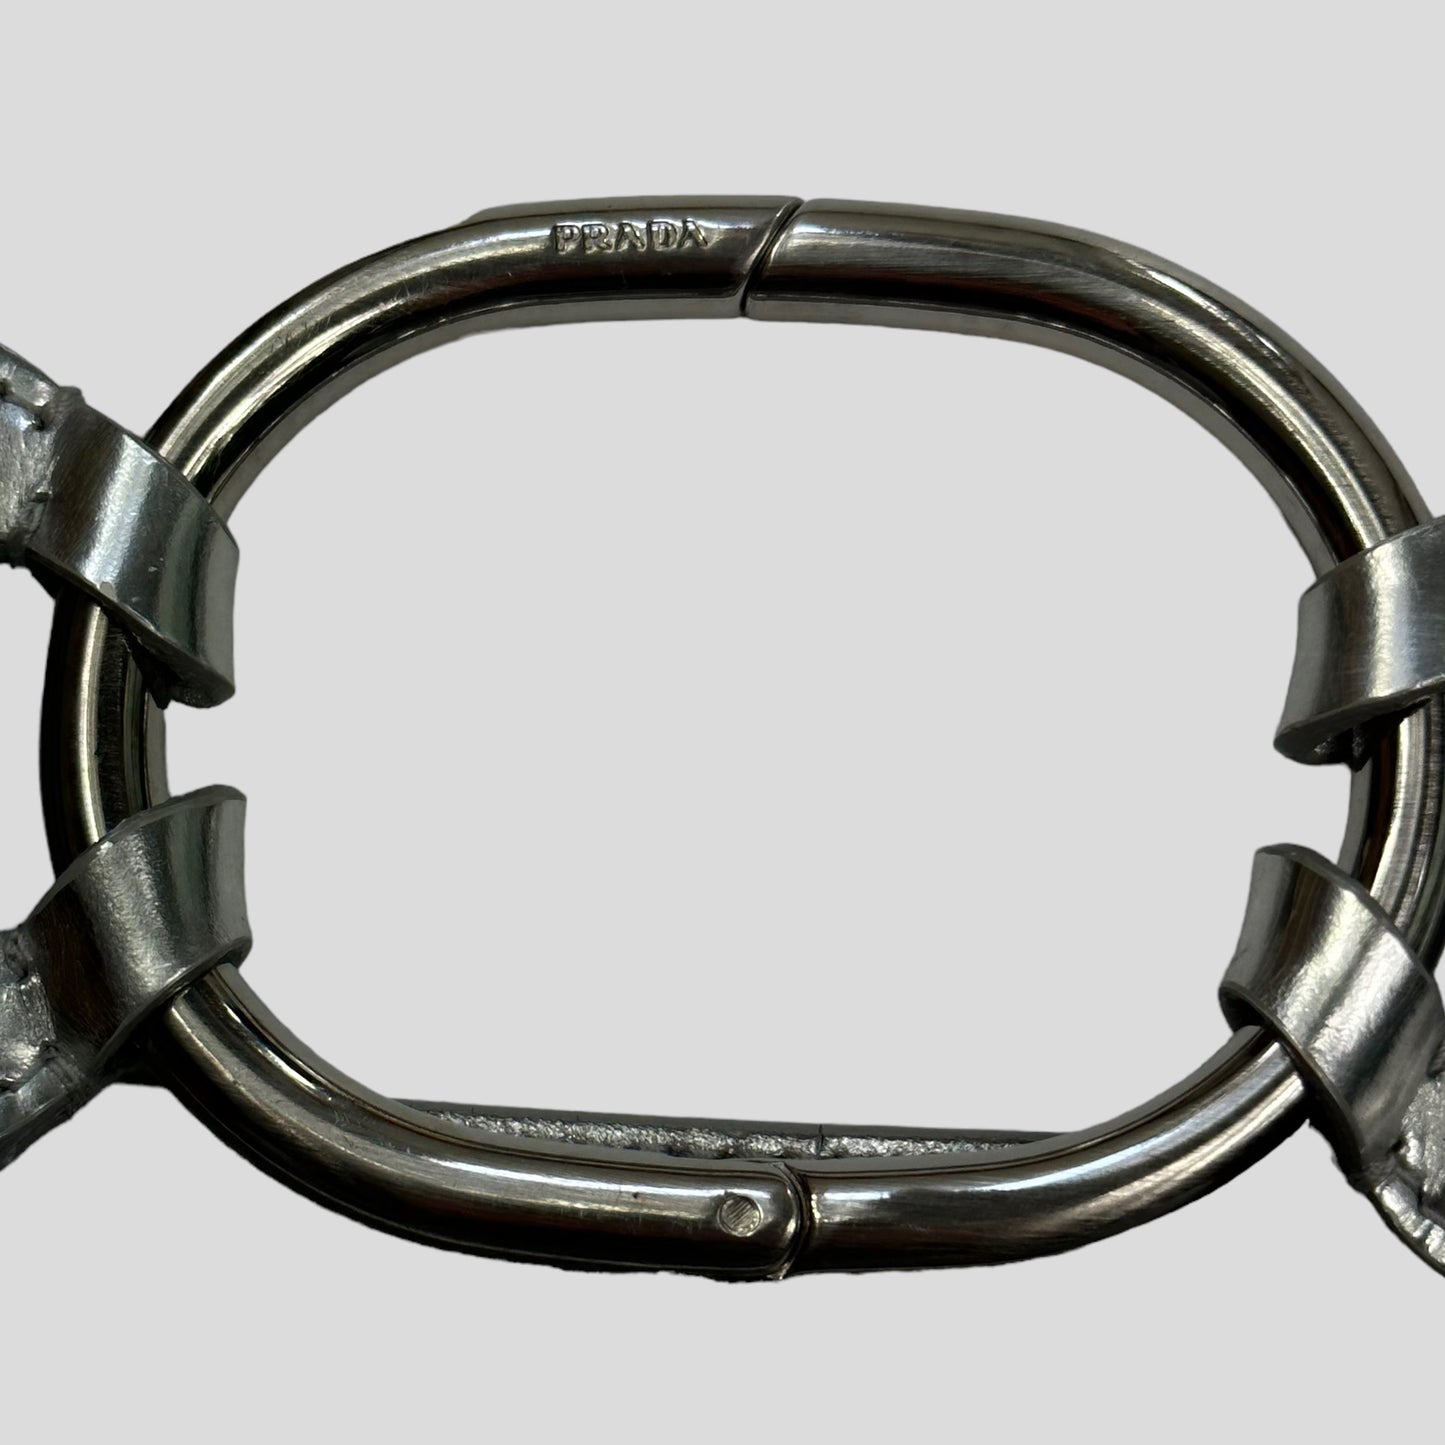 Prada Milano 90’s Astro Leather Metal Buckle Belt